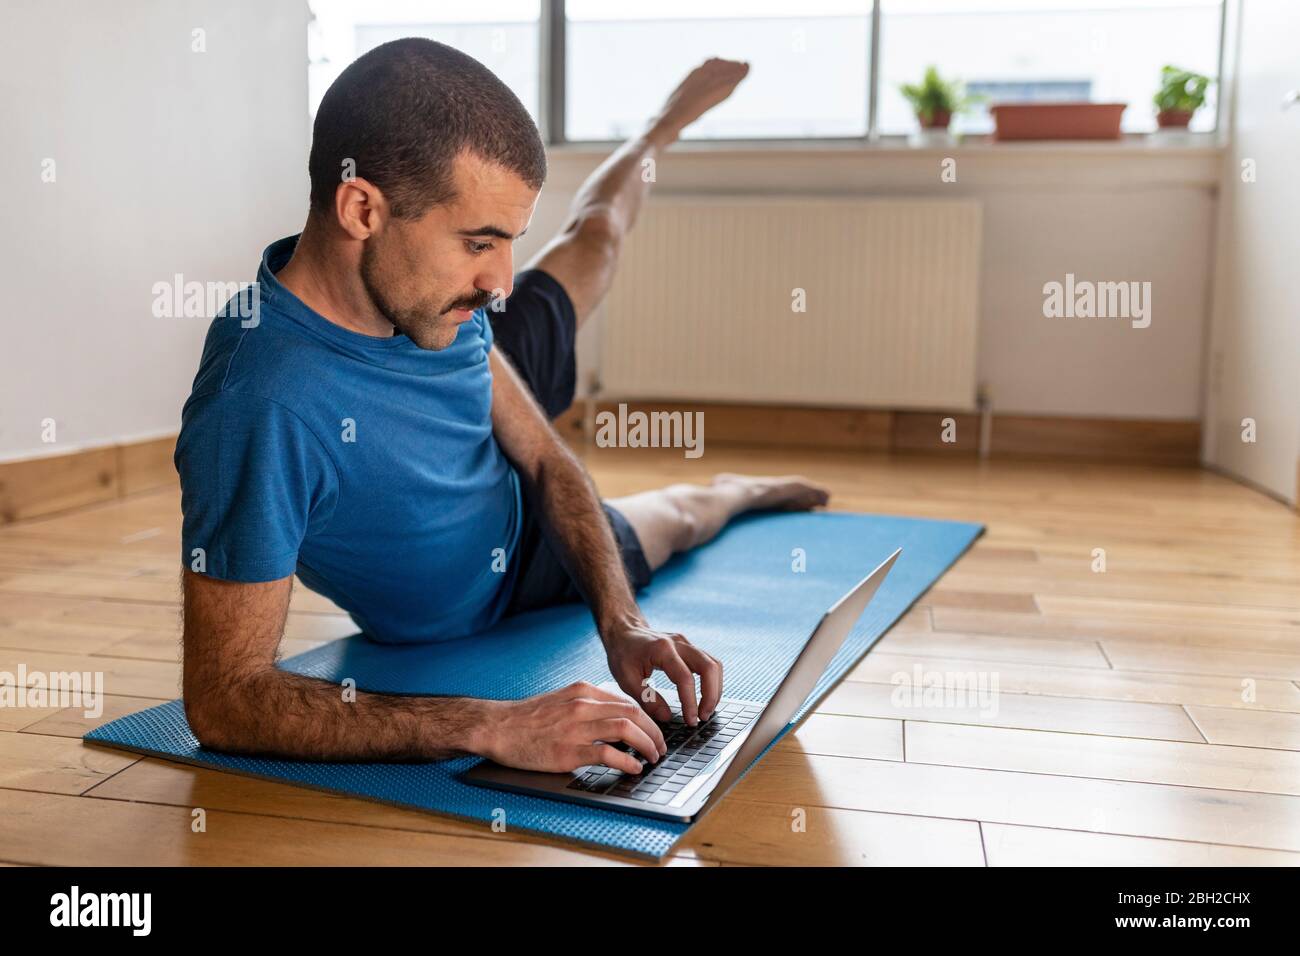 Sportive man lifting his leg and using laptop at home Stock Photo